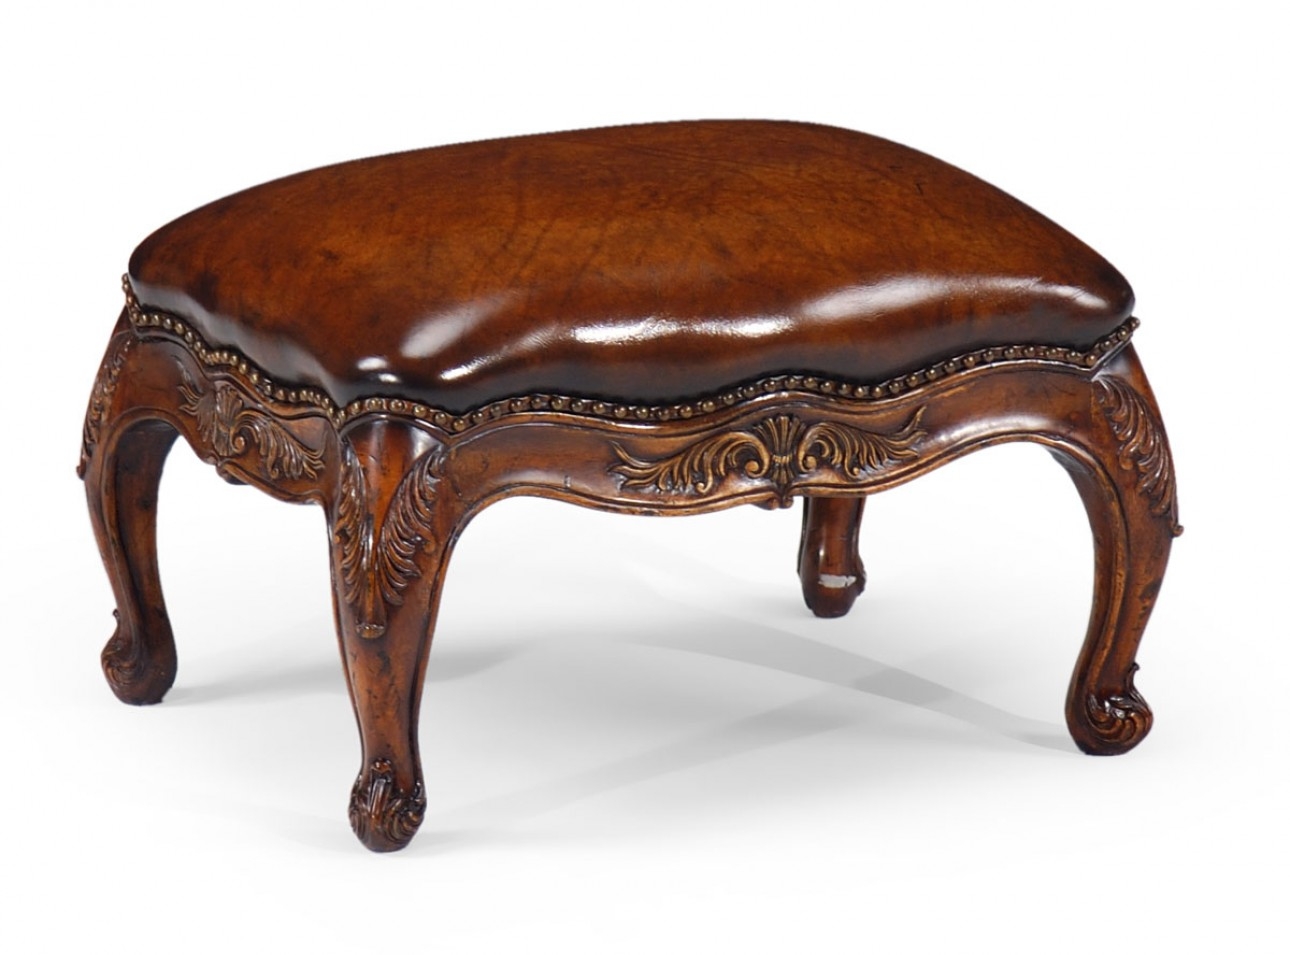 https://bernadettelivingston.com/2860/quality-upholstered-furniture-small-footstool-ottoman-walnut.jpg